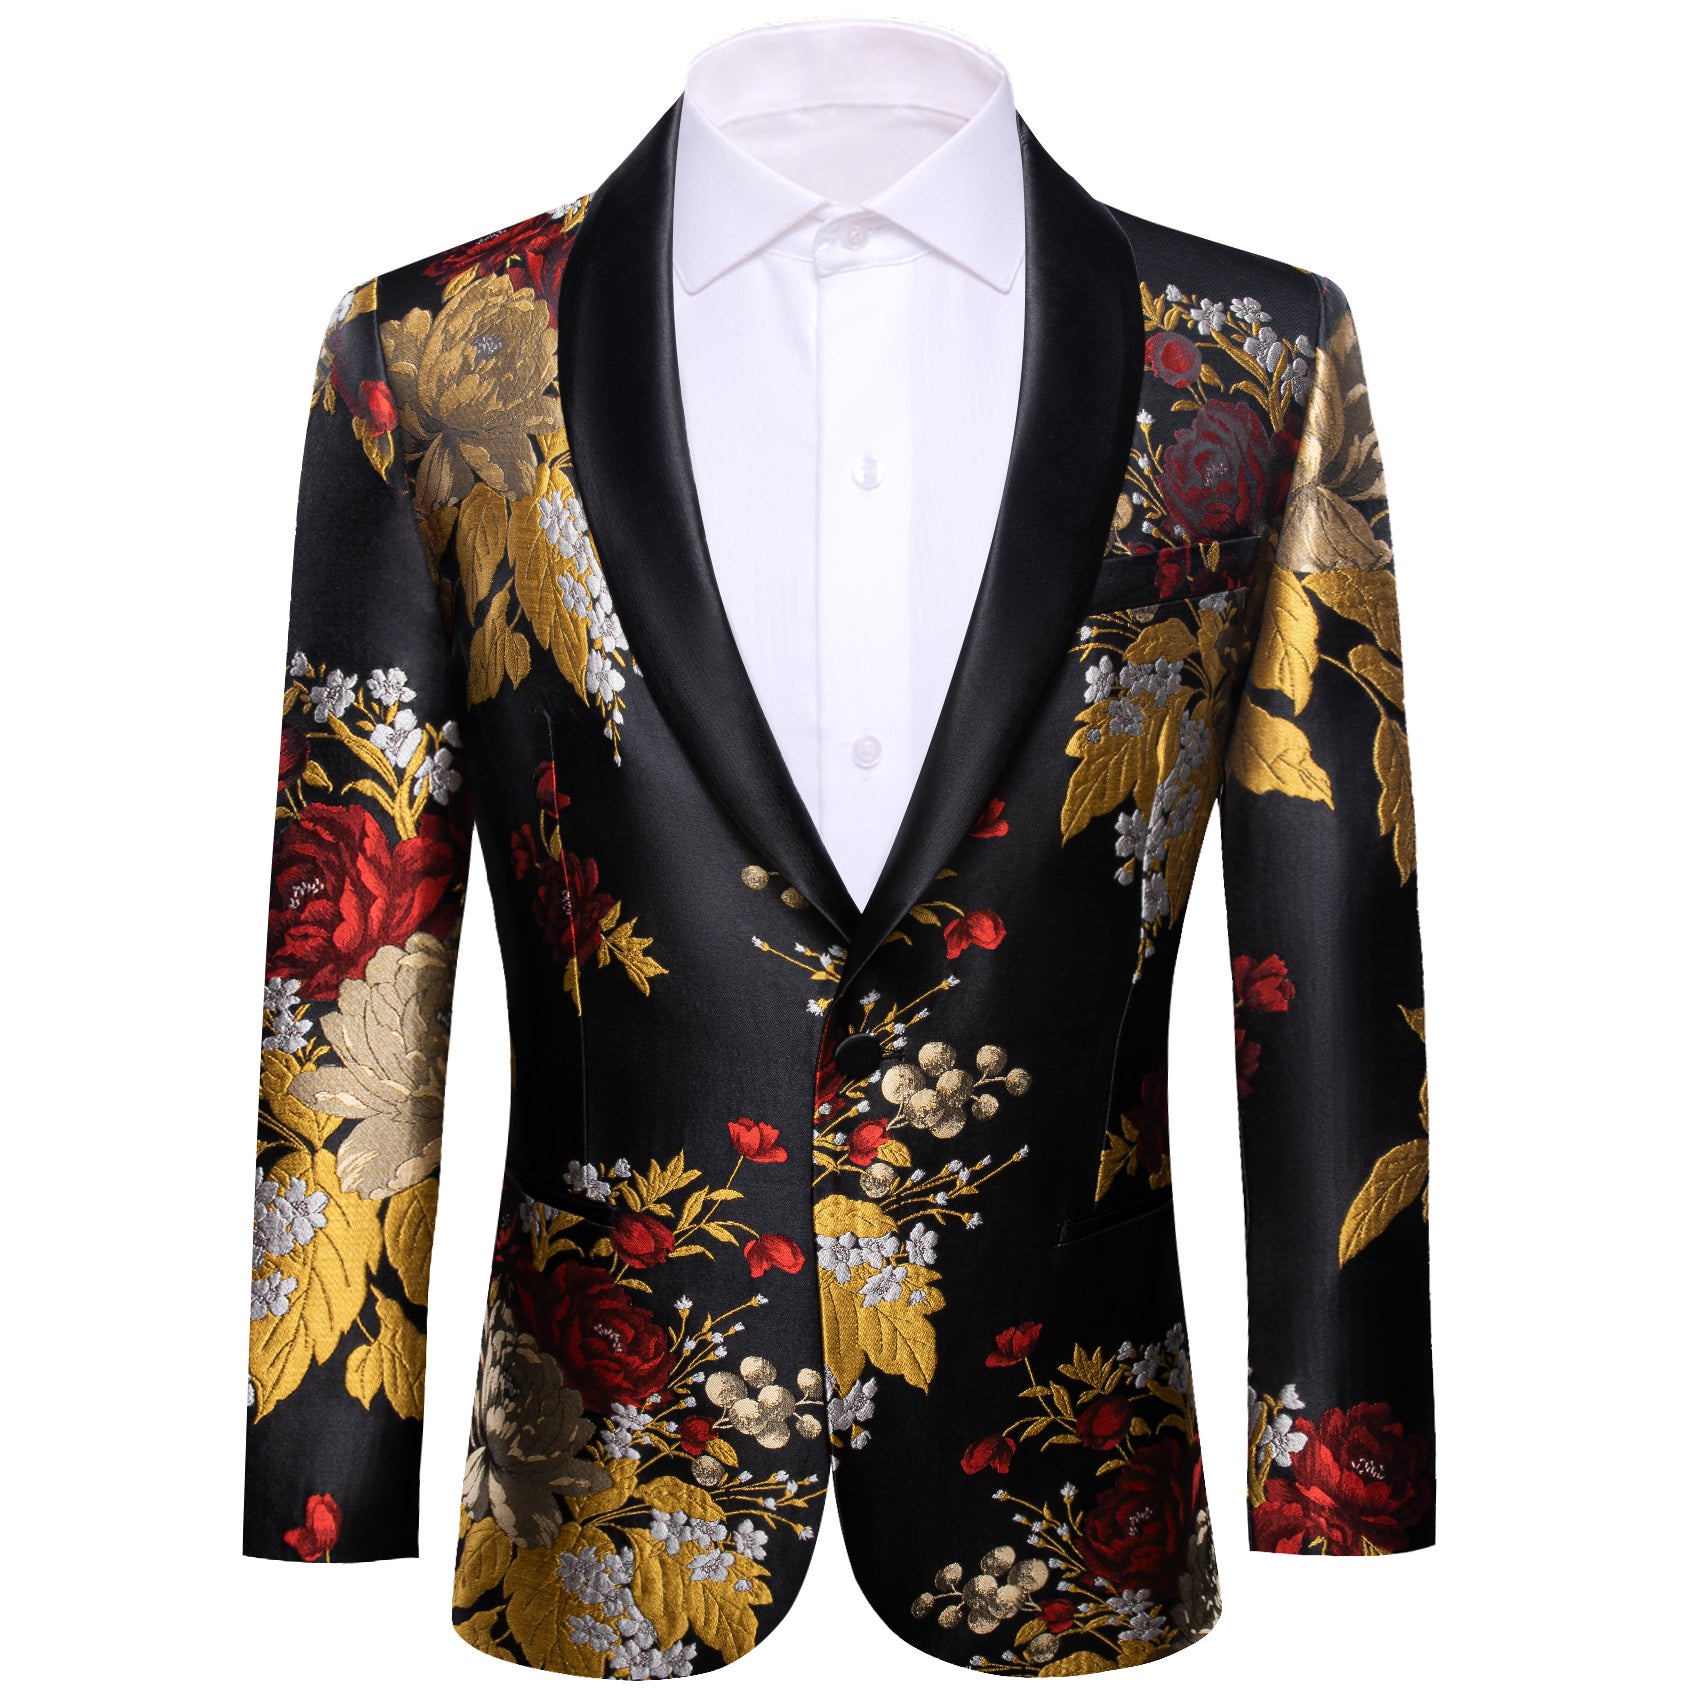 Men's Dress Party Black Yellow Floral Suit Jacket Slim One Button Stylish Blazer